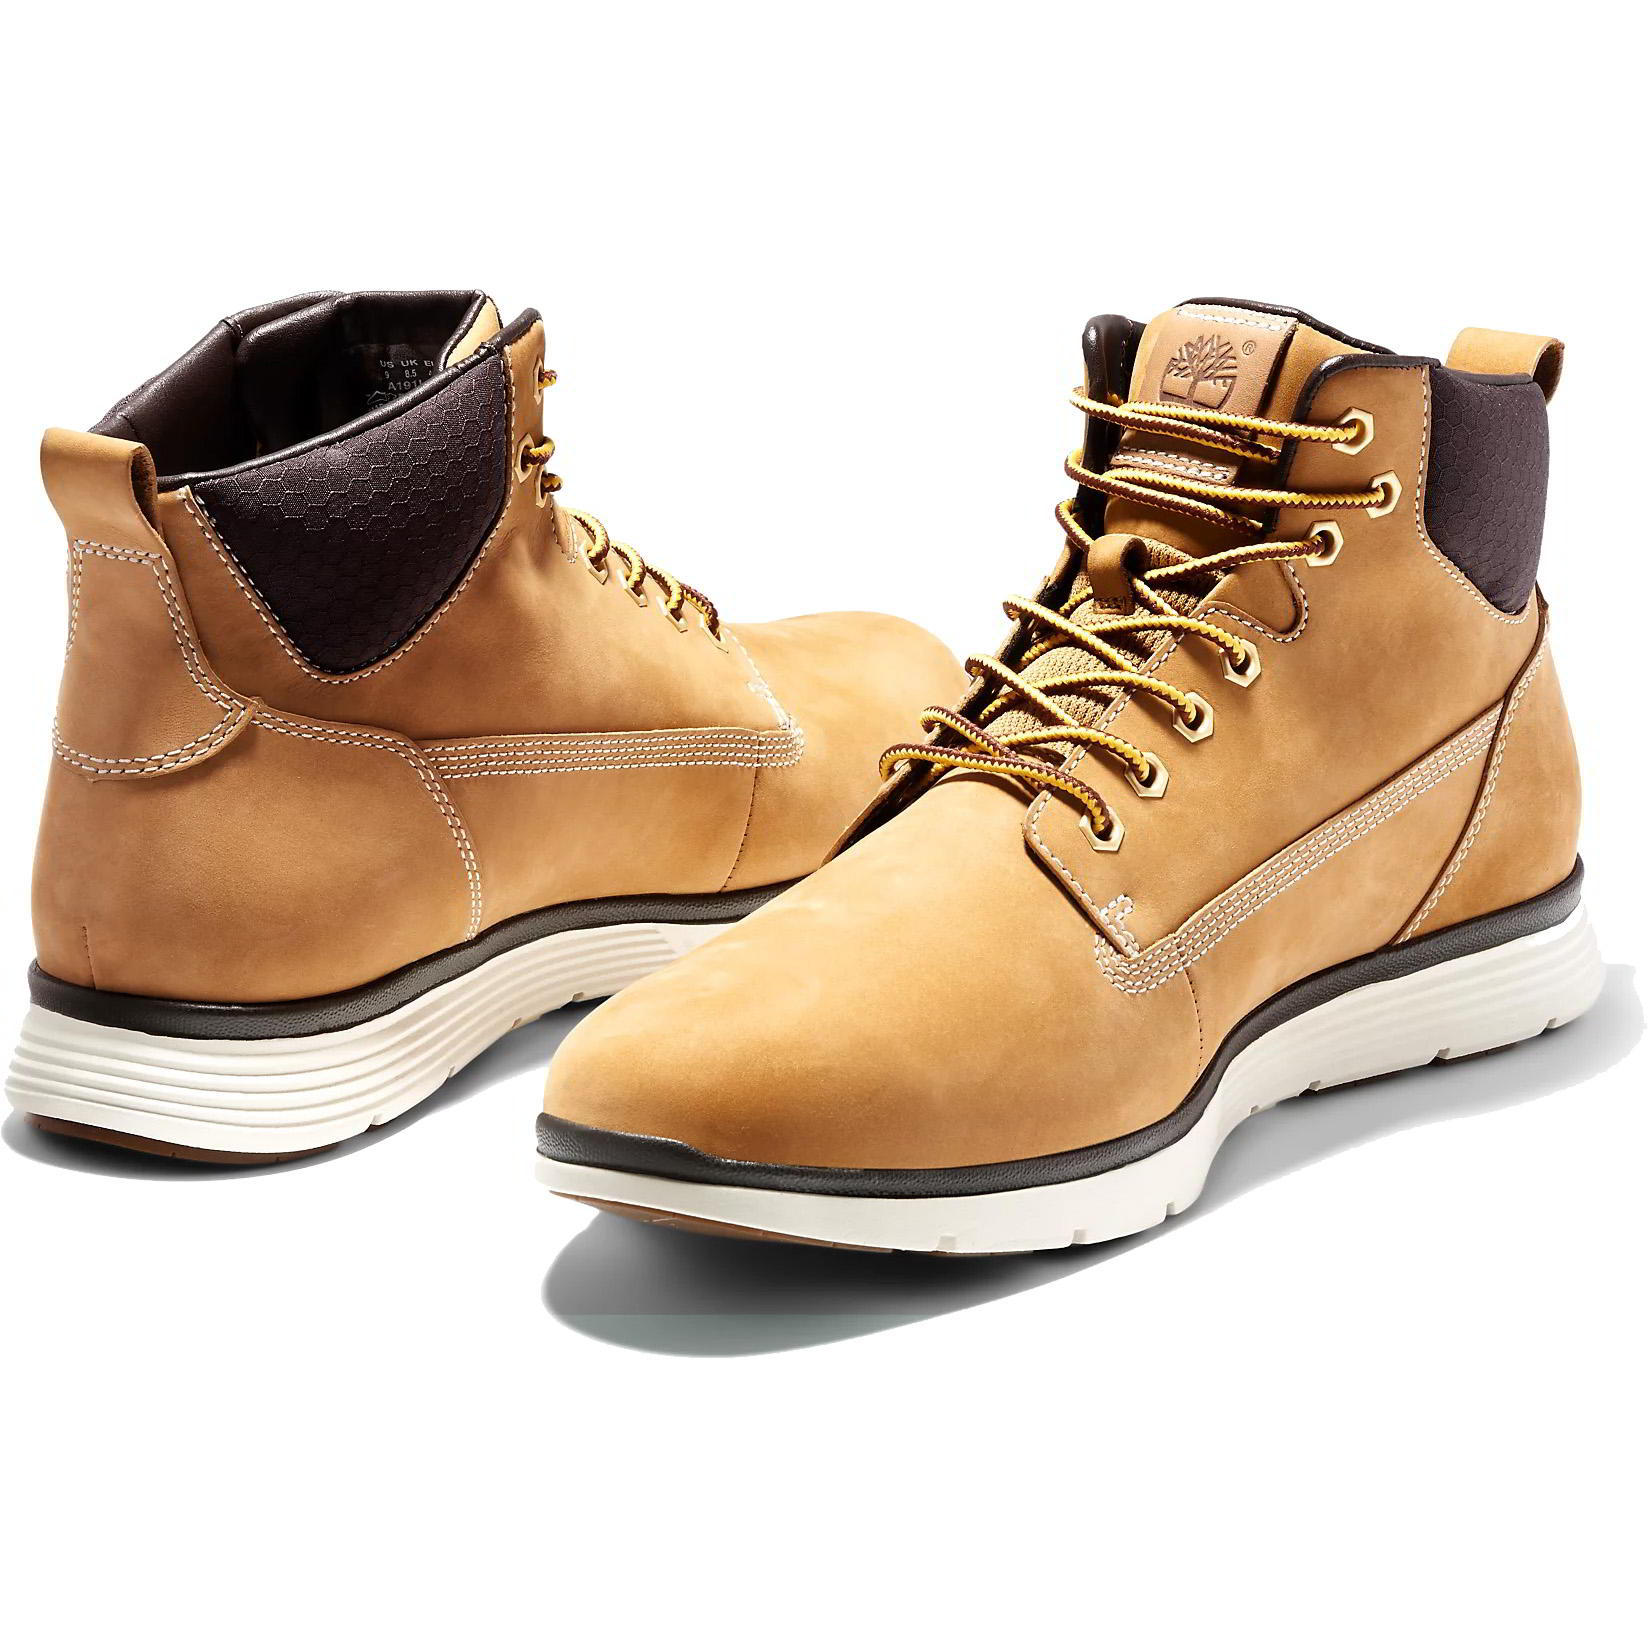 Timberland Mens Killington Chukka Wide Fit Desert Ankle Boots - Wheat A191I 2951